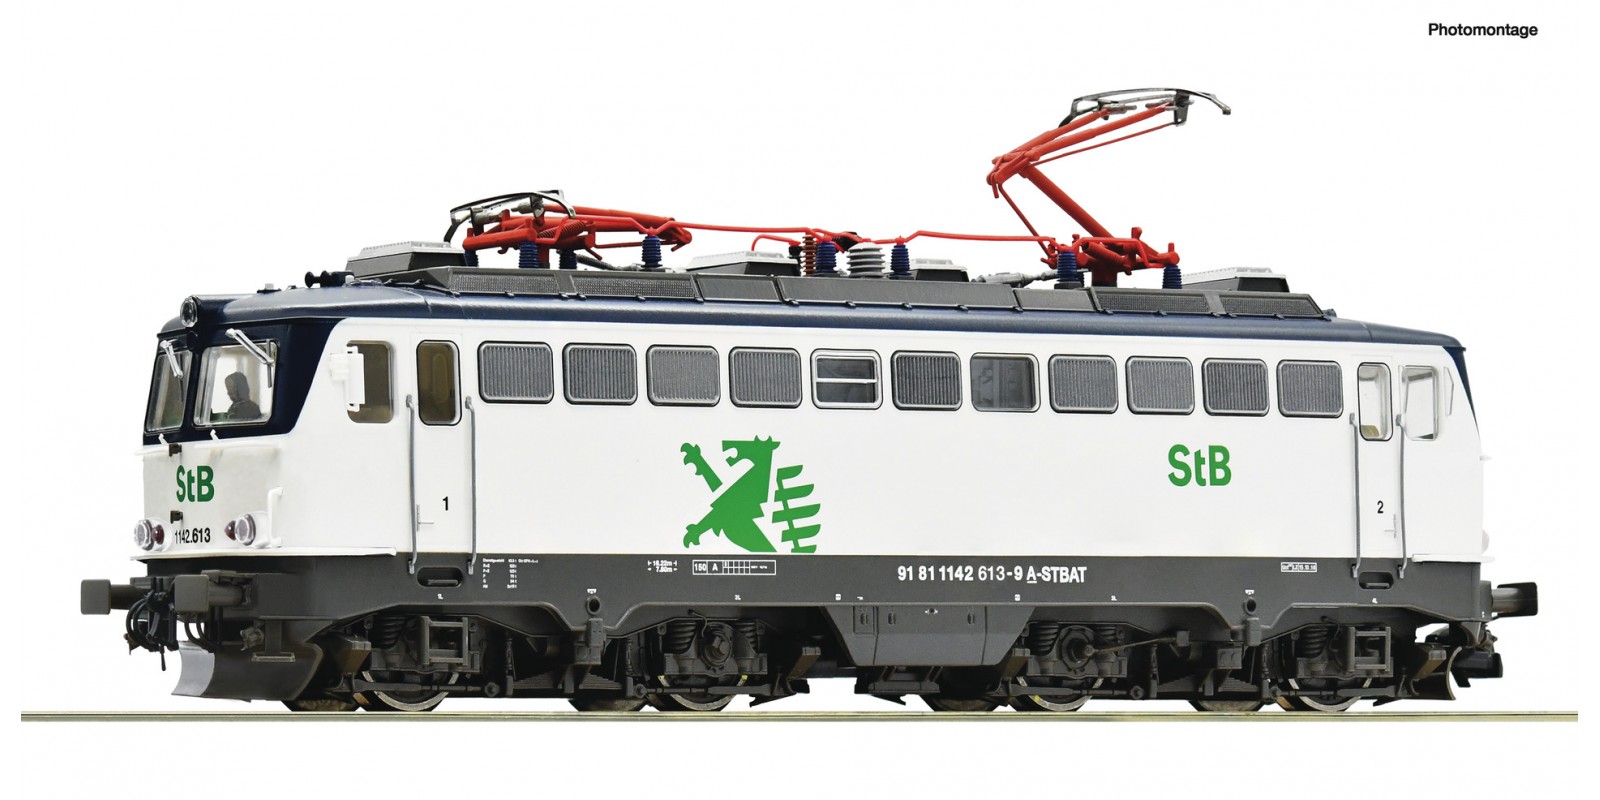 RO7500042 Electric locomotive 1142  613-9, StB               